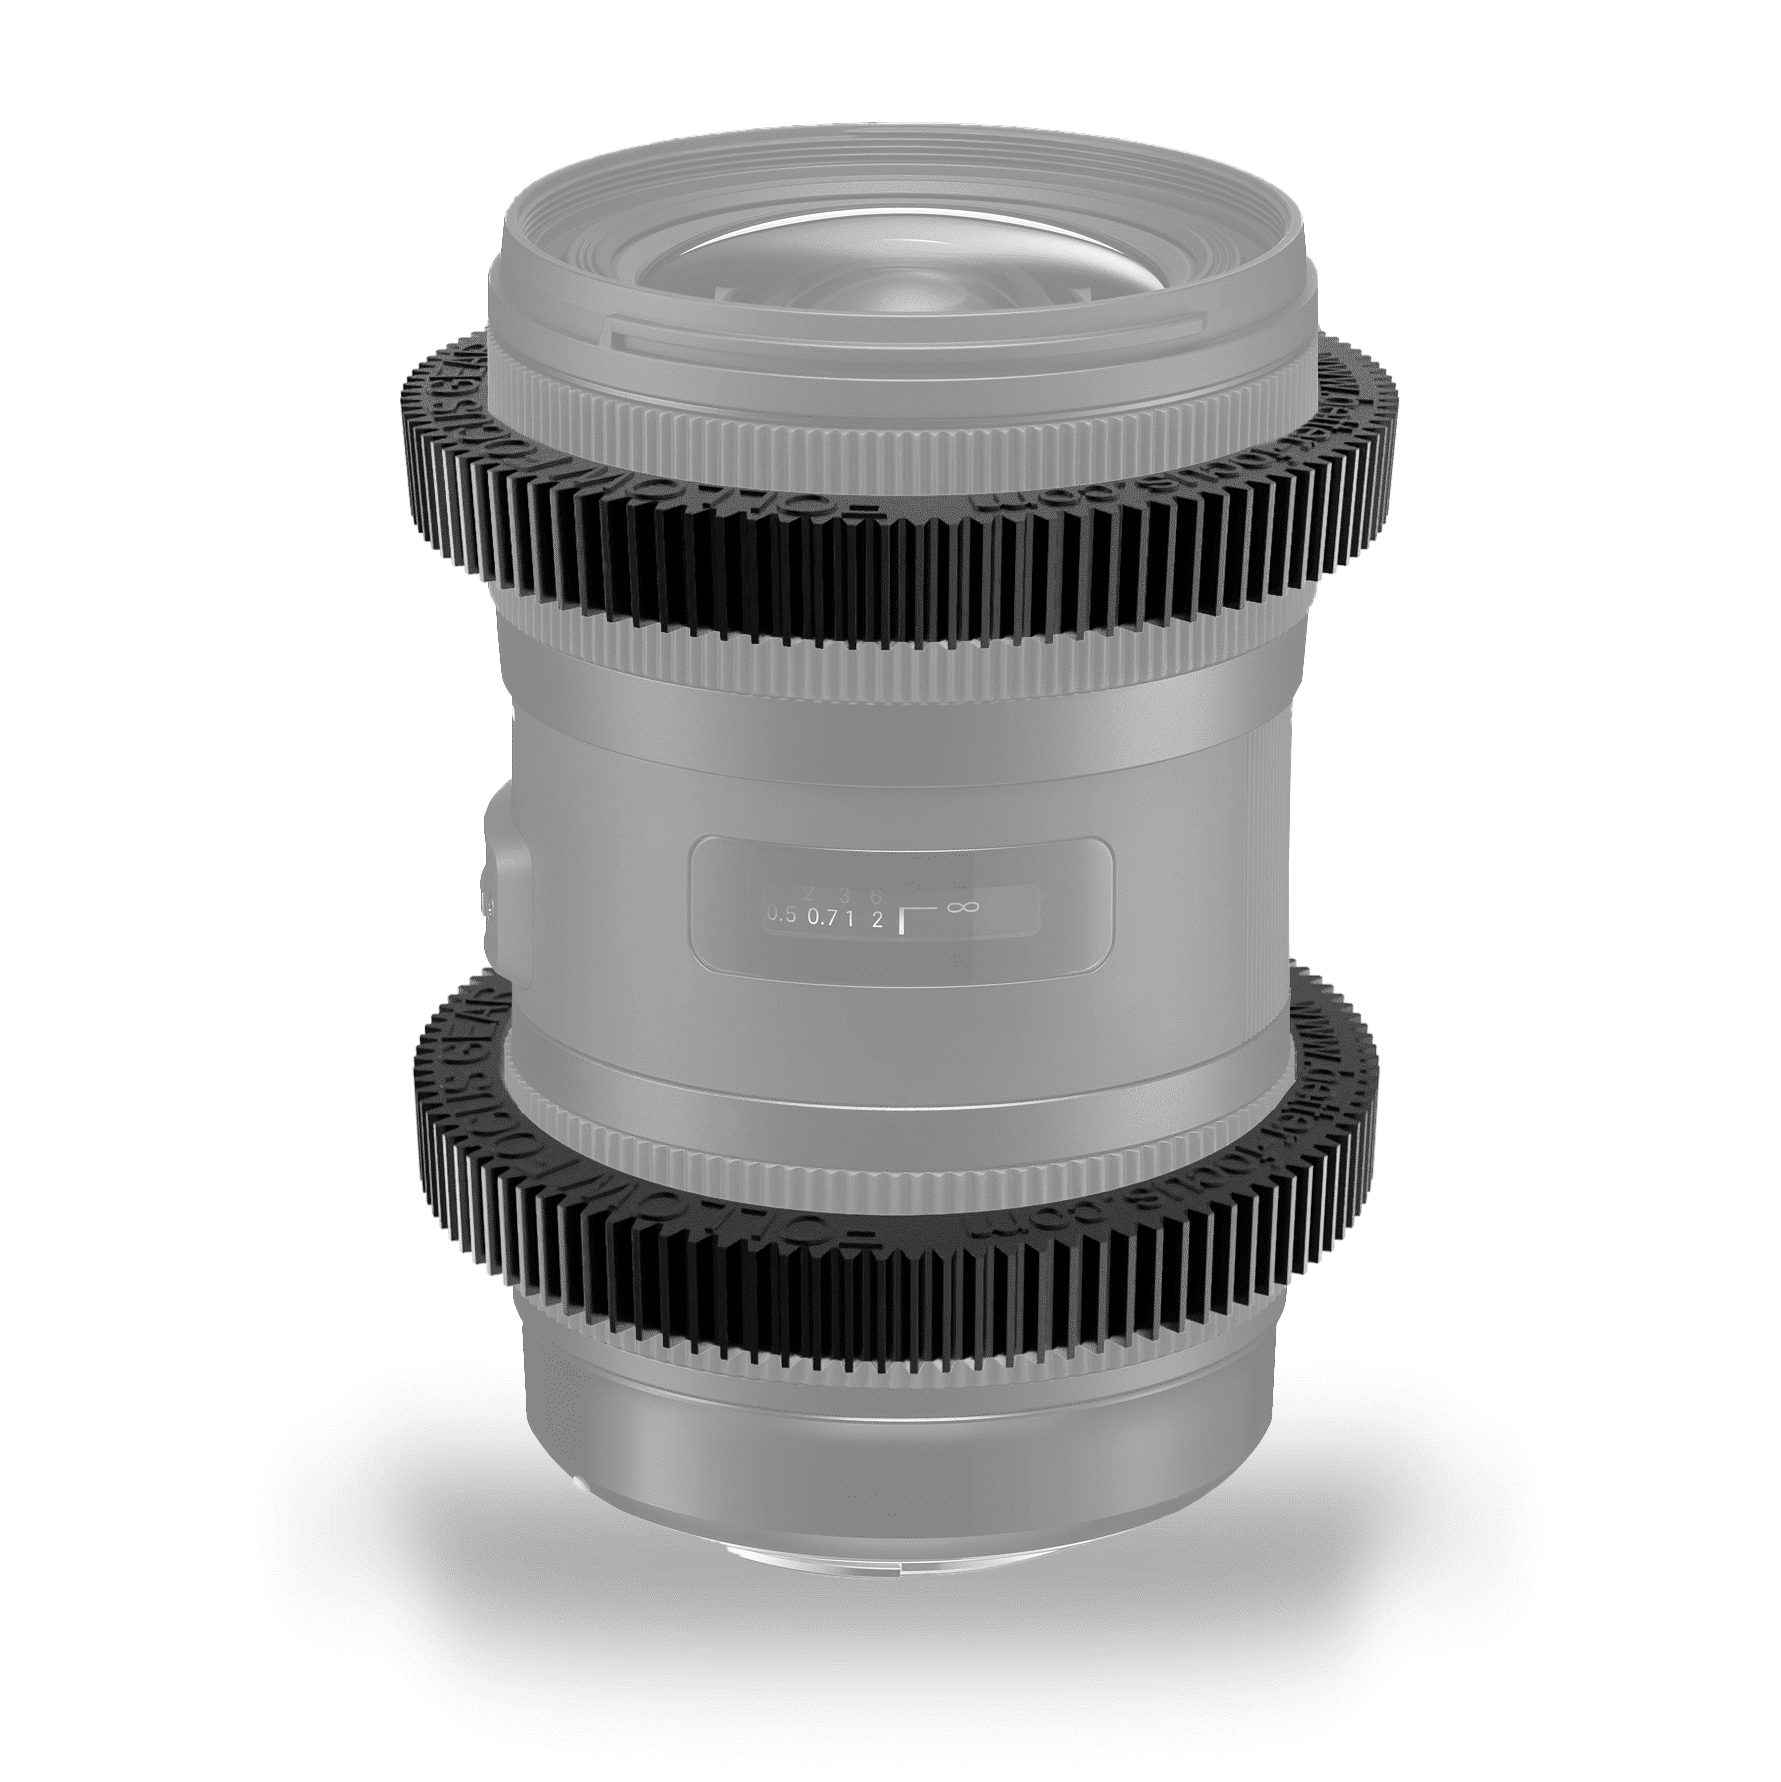 Follow Focus Ring for Fujifilm XF 18-55mm 1.2.8-4 RLM OIS lens